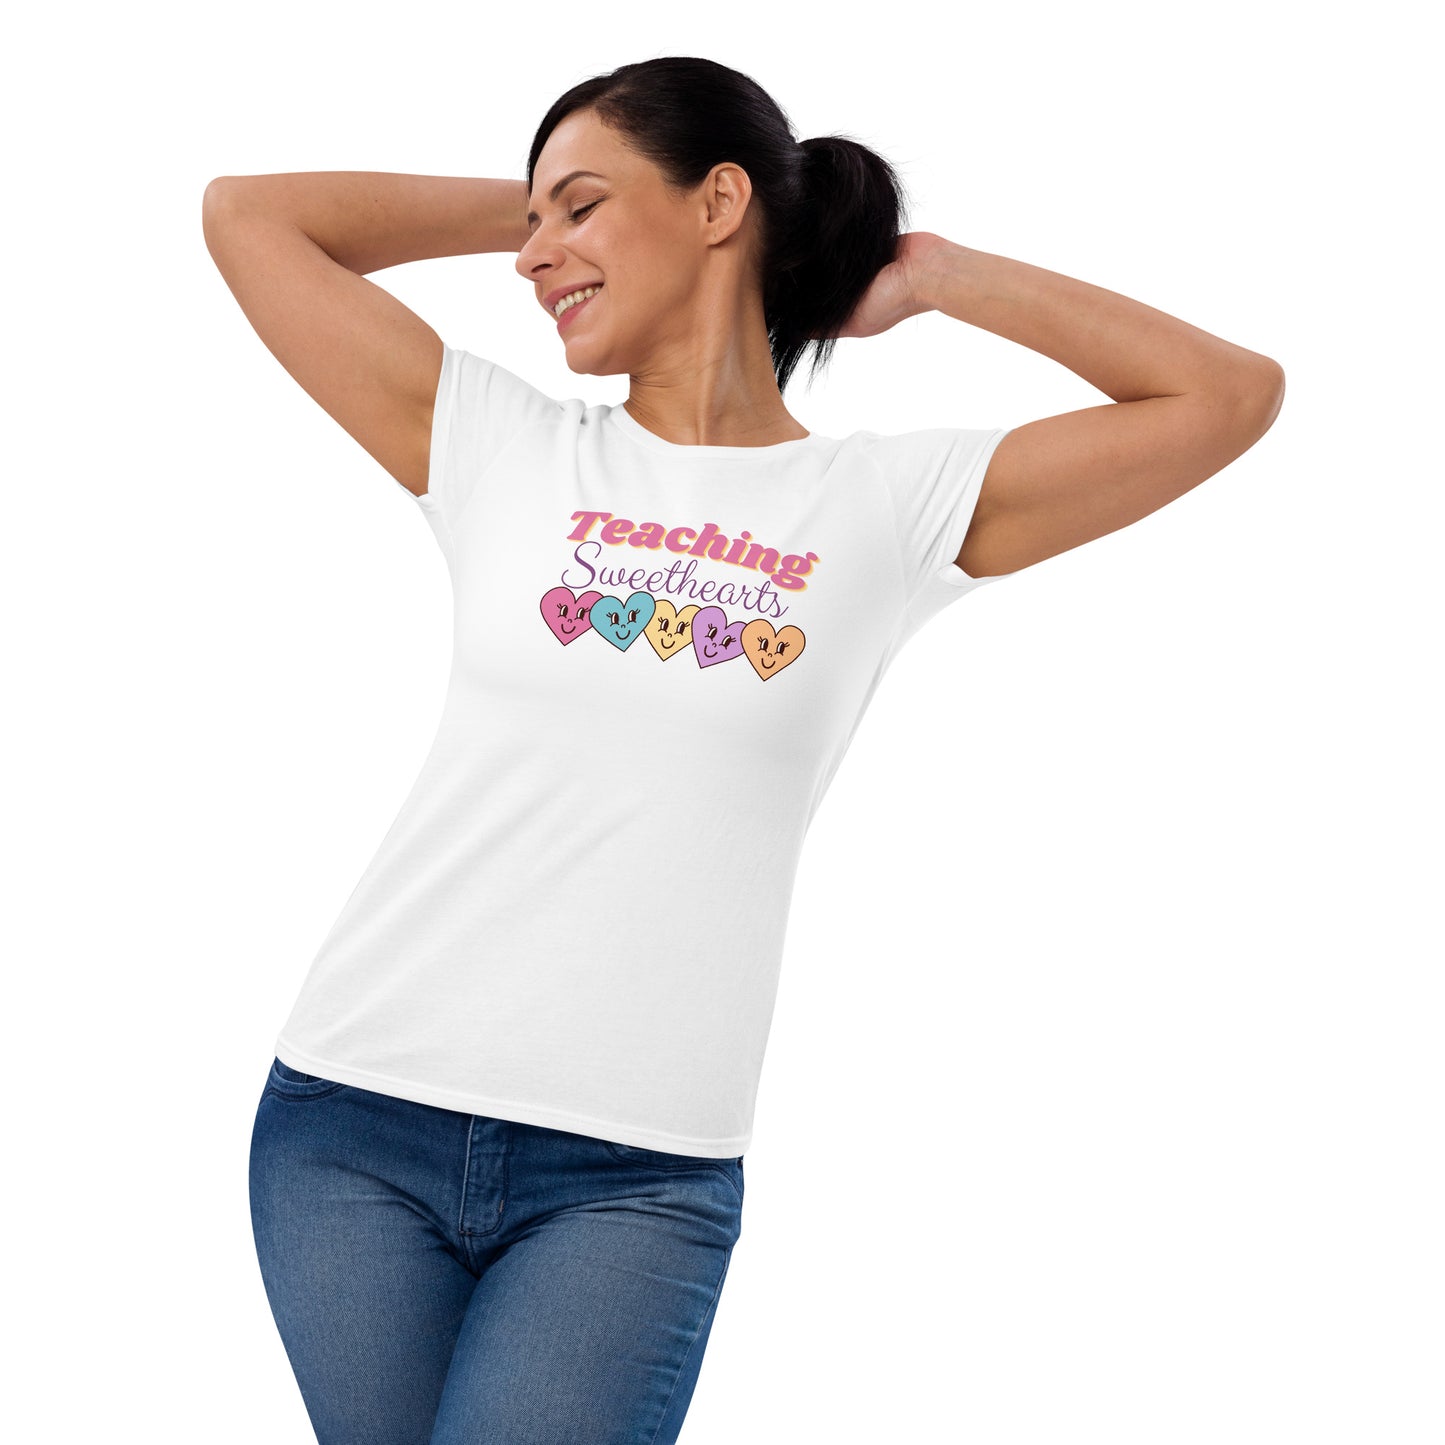 Teaching Sweethearts Women's Short Sleeve T-shirt